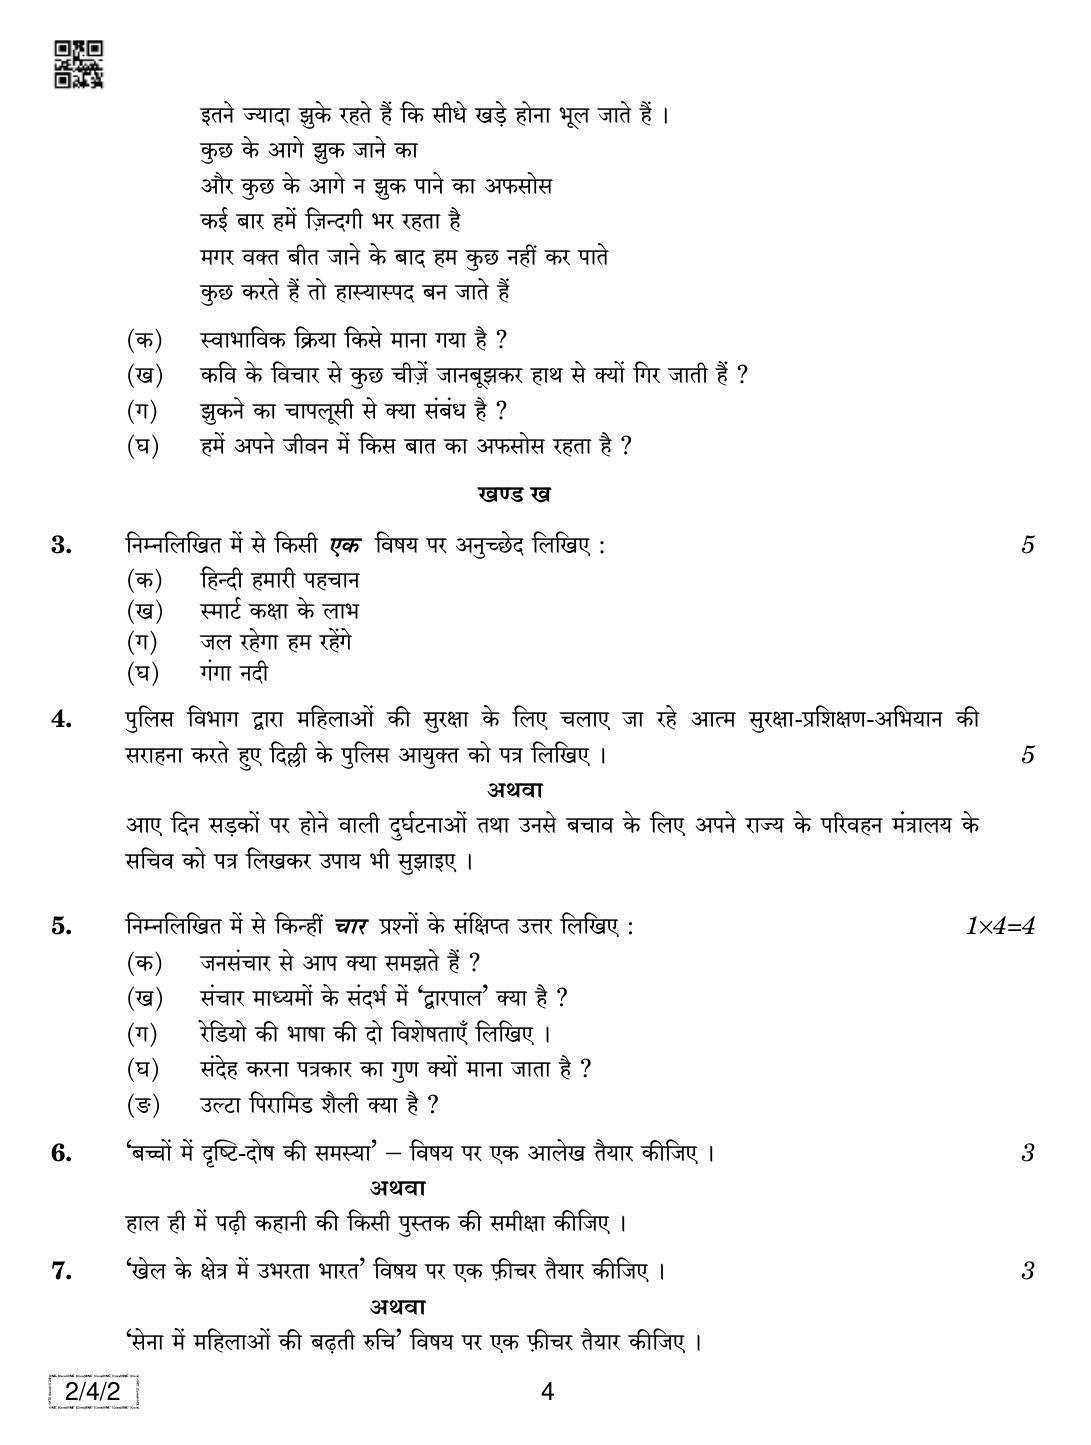 CBSE Class 12 2-4-2 Hindi Core 2019 Question Paper - Page 4